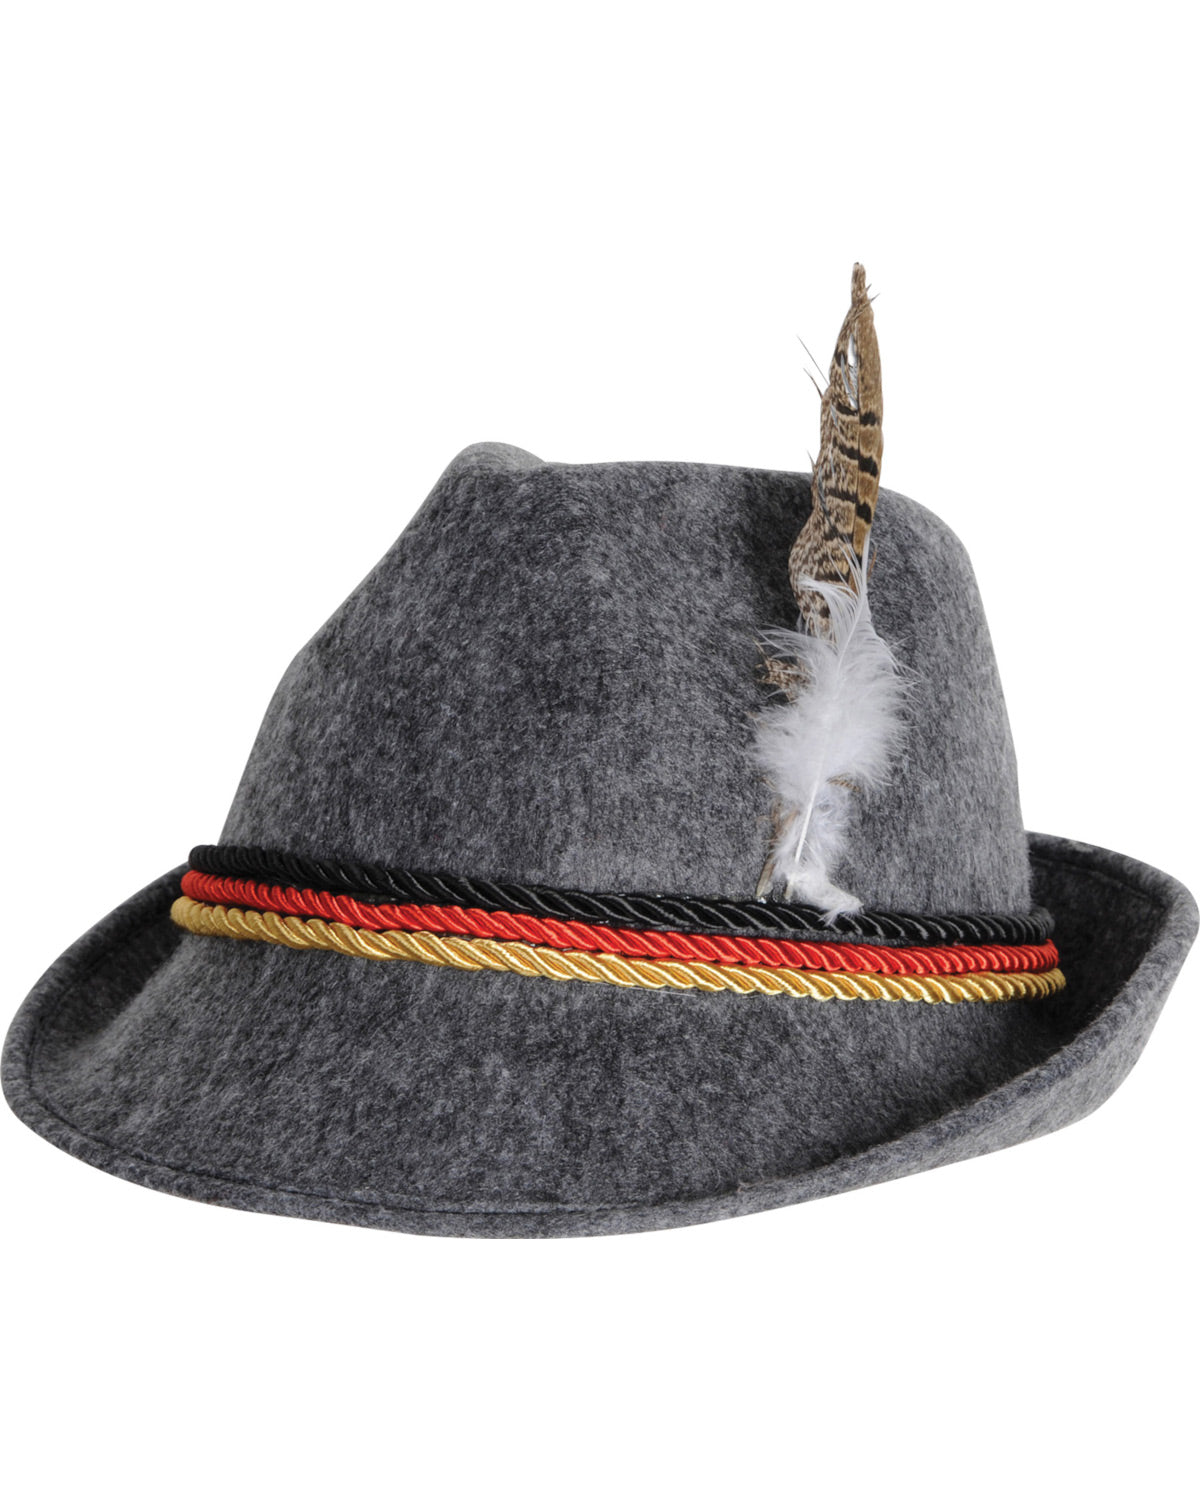 German Alpine Hat